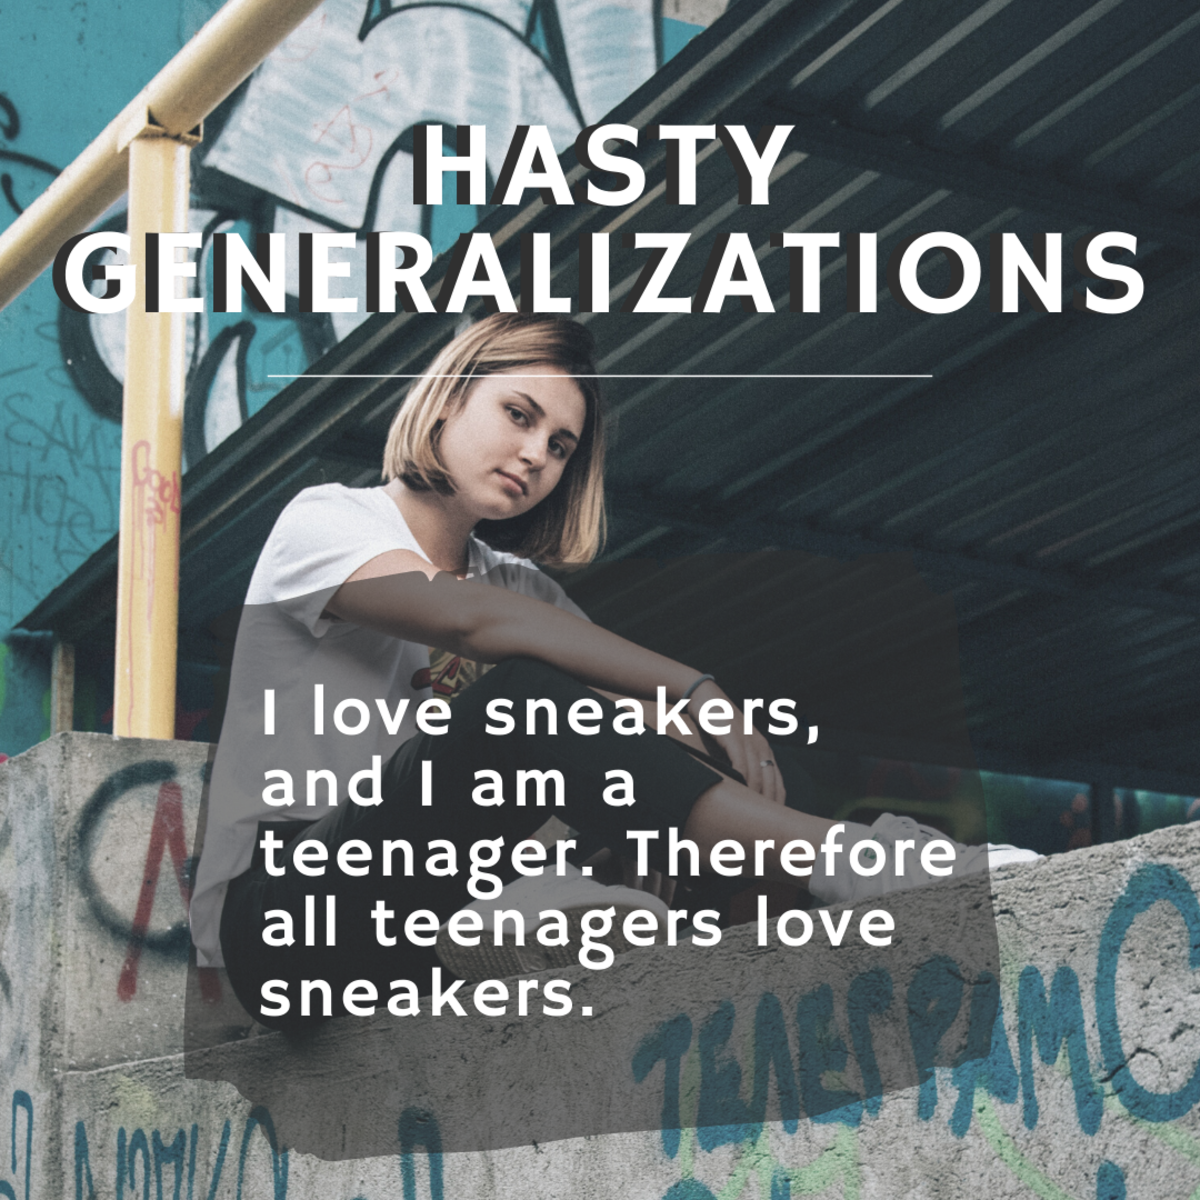 Hasty generalization